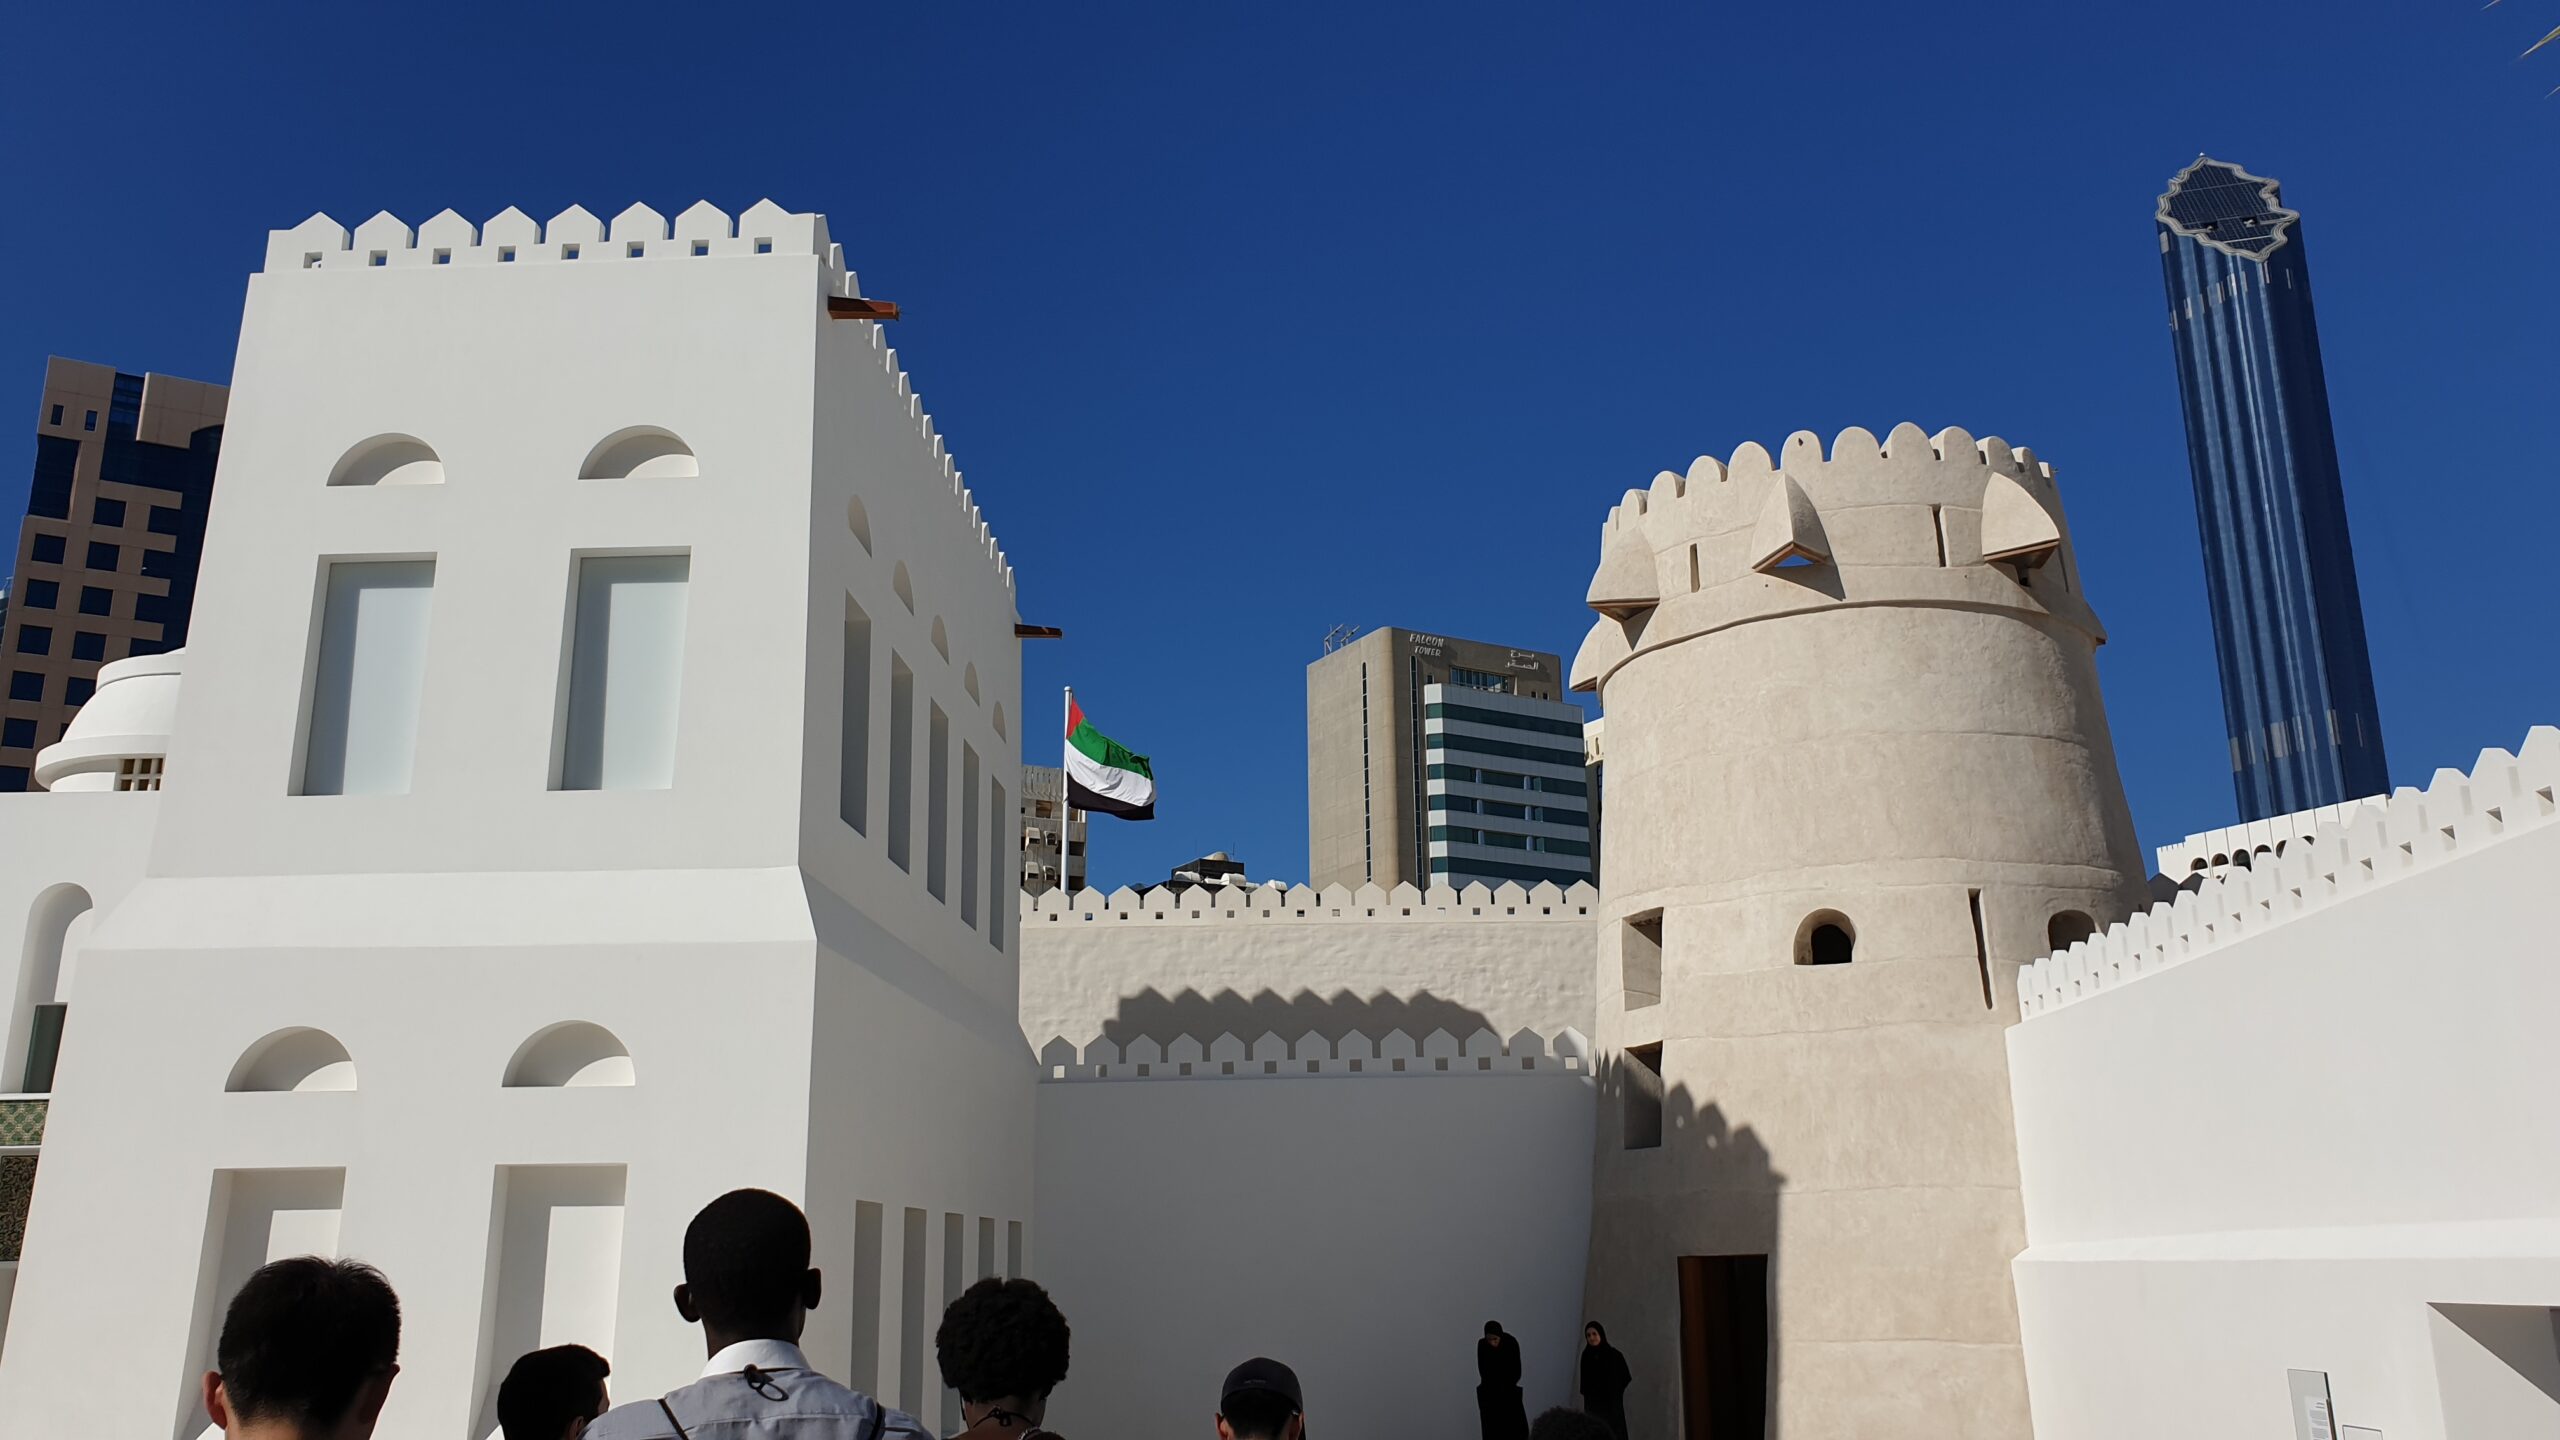 Qasr Al Hosn, a historical landmark in Abu Dhabi. It is the oldest stone building in the city.